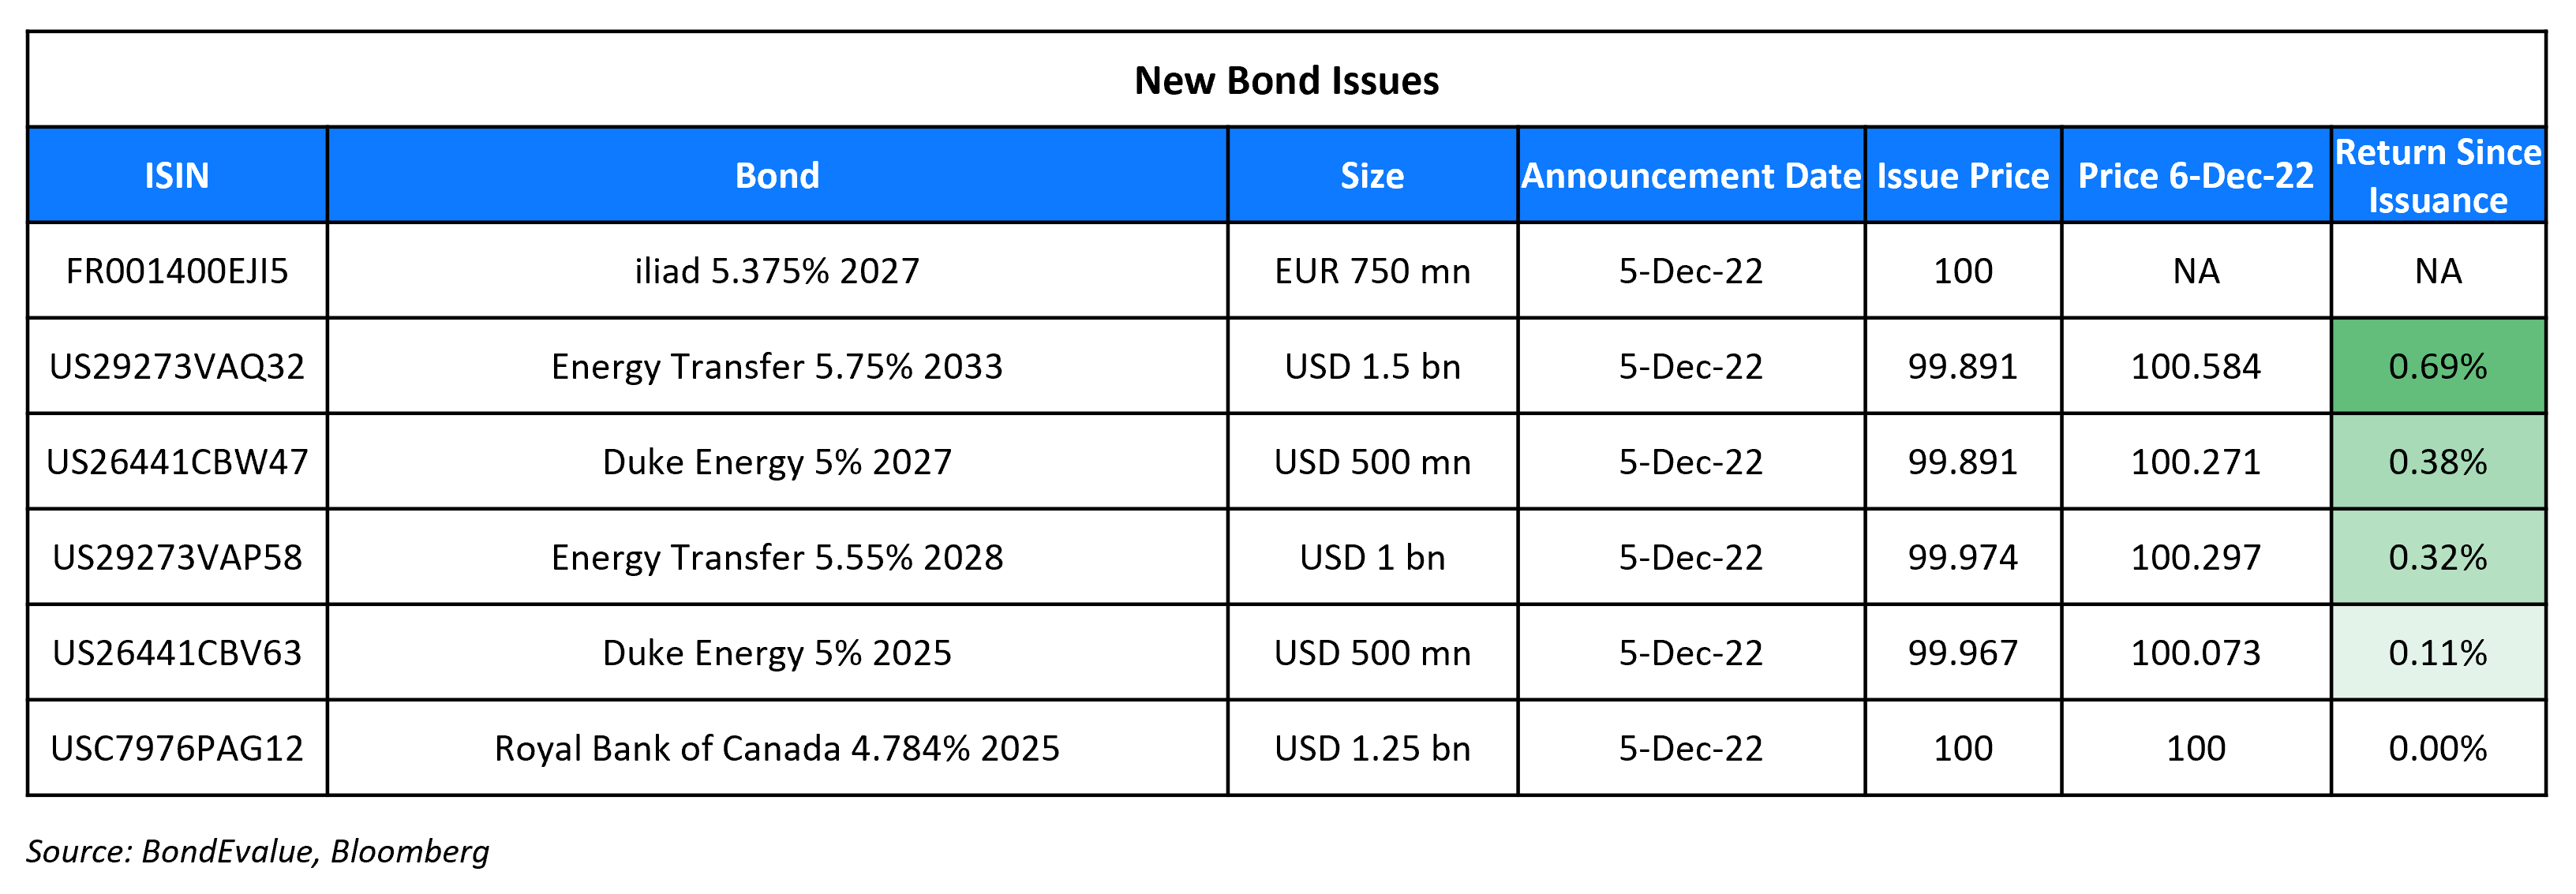 New Bond Issues 6 Dec 22